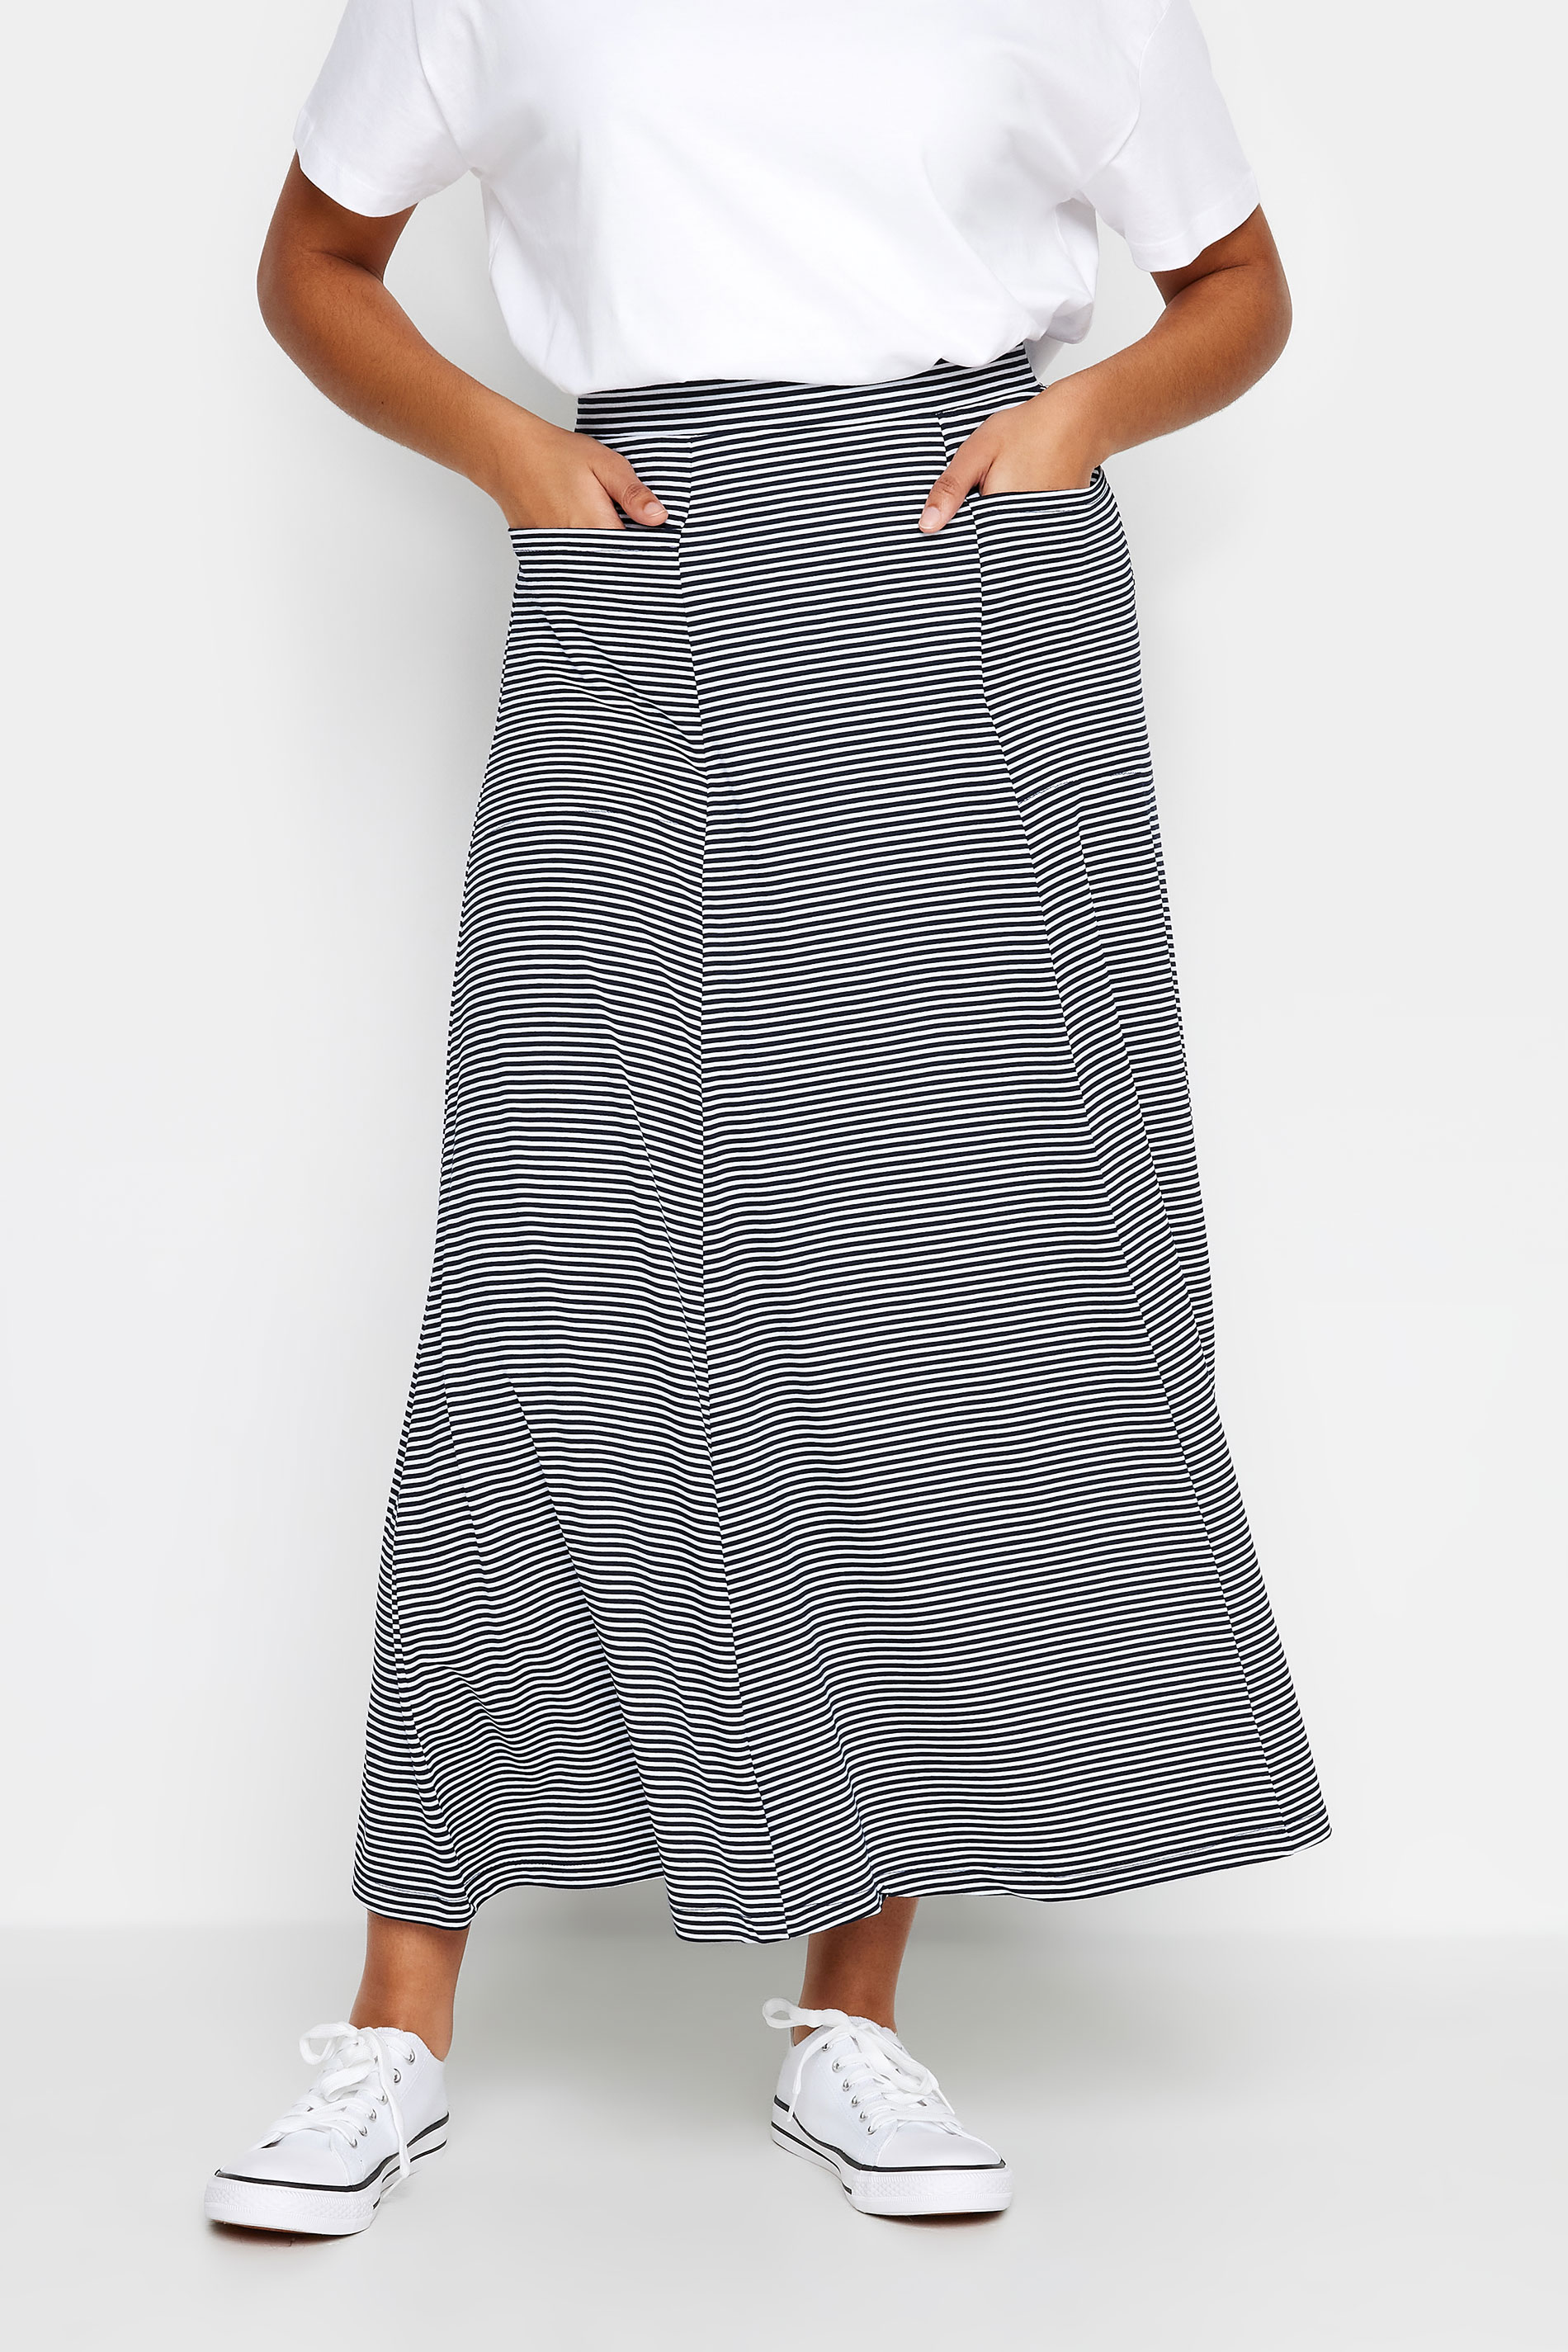 M&Co Navy Blue & White Striped Pocket Maxi Skirt | M&Co 1